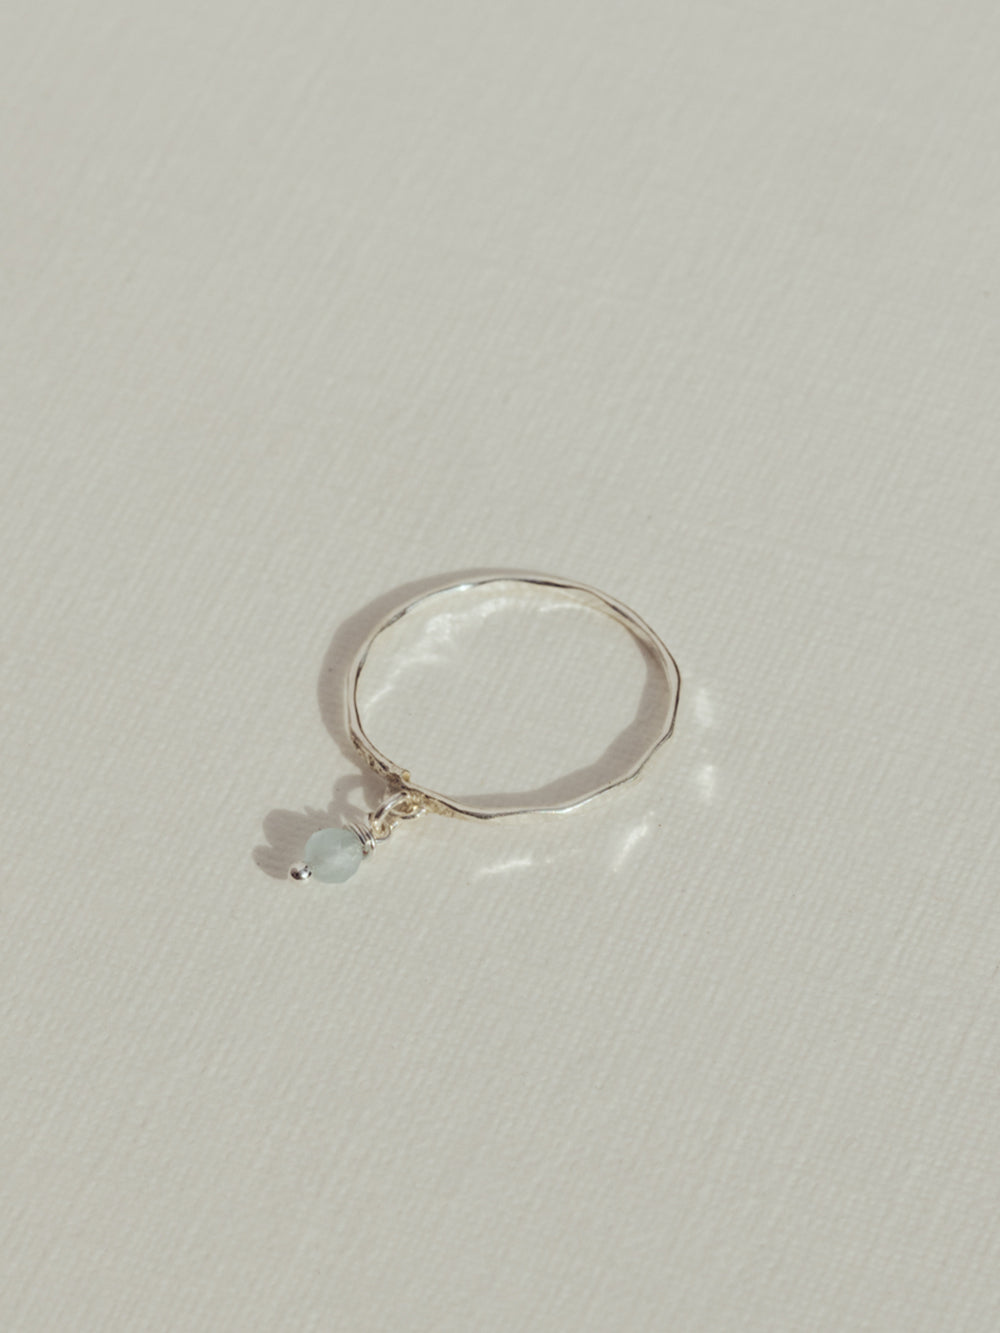 Birthstone ring March - Aquamarine | 925 Sterling Silver